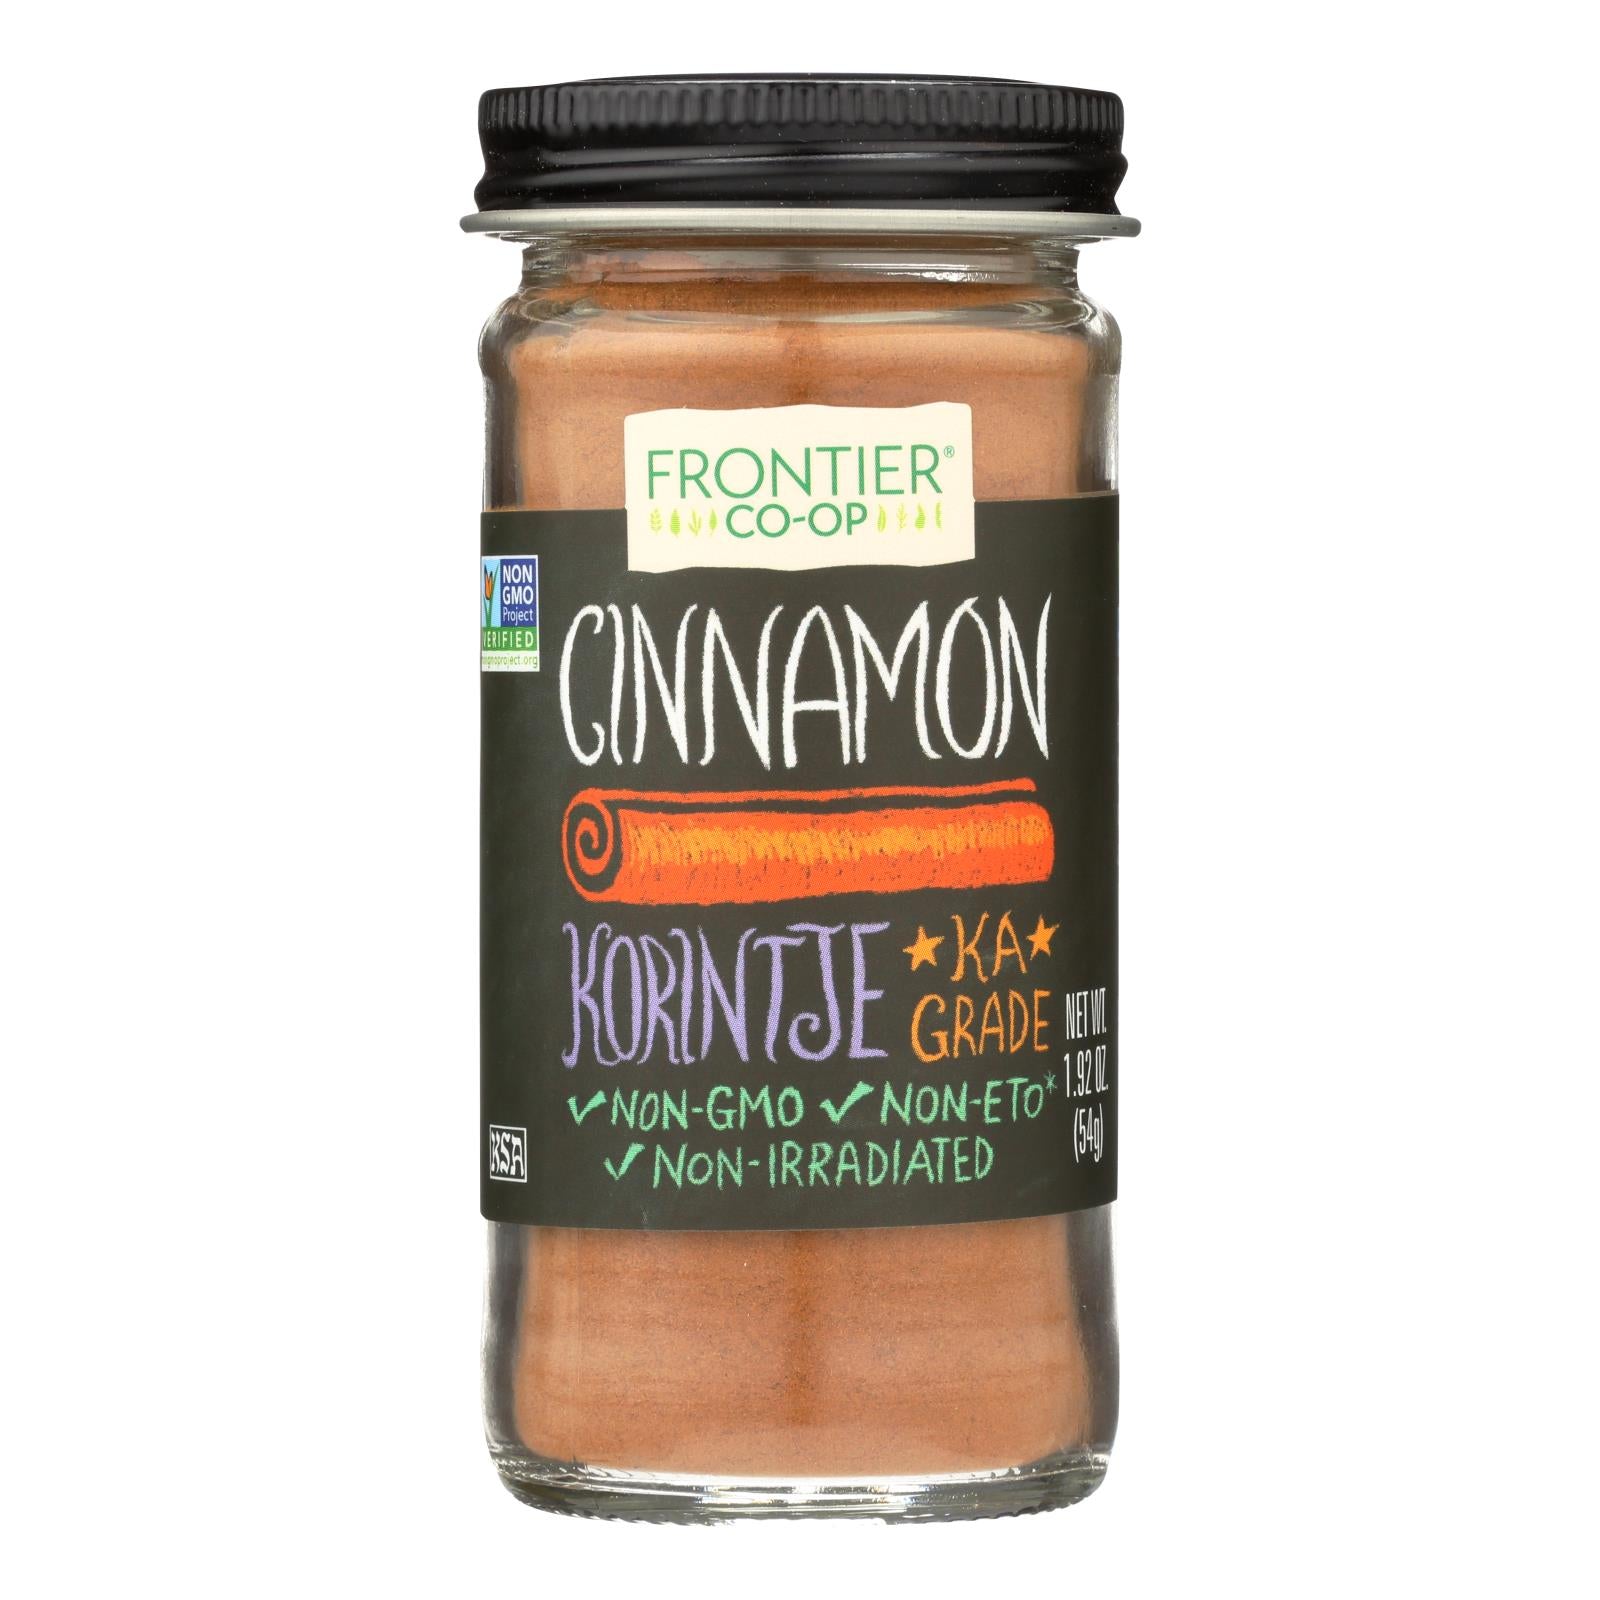 Frontier Herb Cinnamon - Ground - Korintje - 3 Percent Oil - A Grade - 1.92 Oz - Whole Green Foods